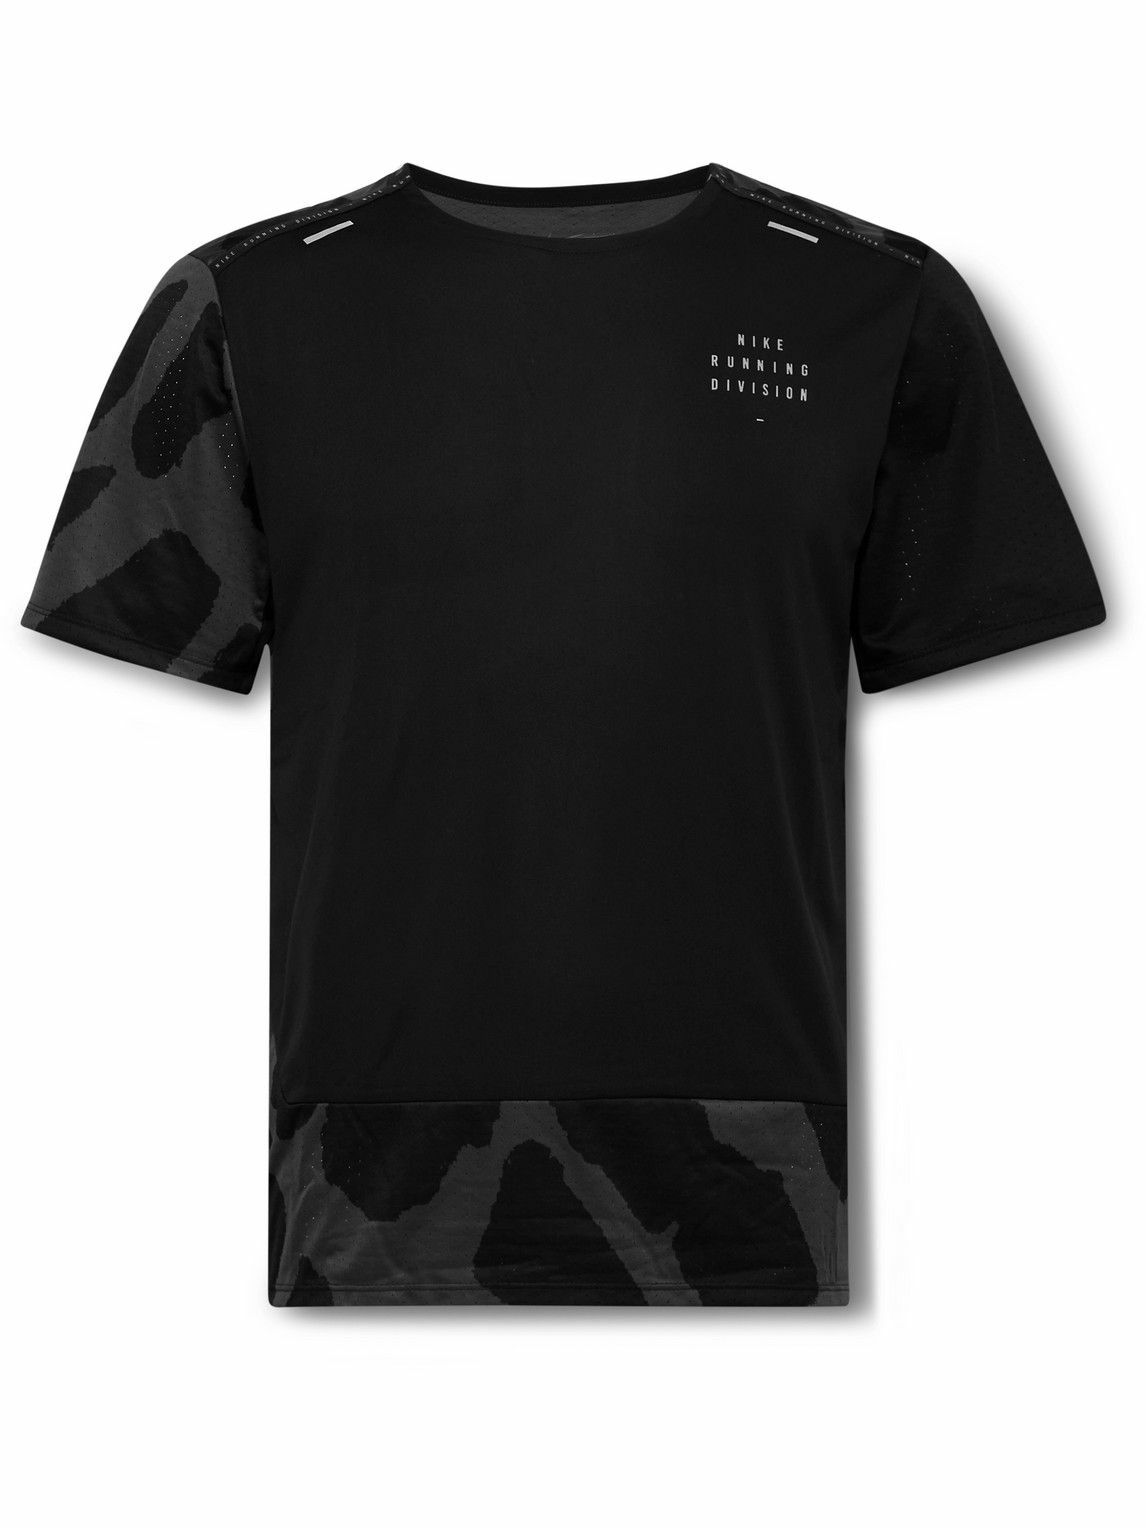 Photo: Nike Running - Rise 365 Run Division Printed Dri-FIT T-Shirt - Black